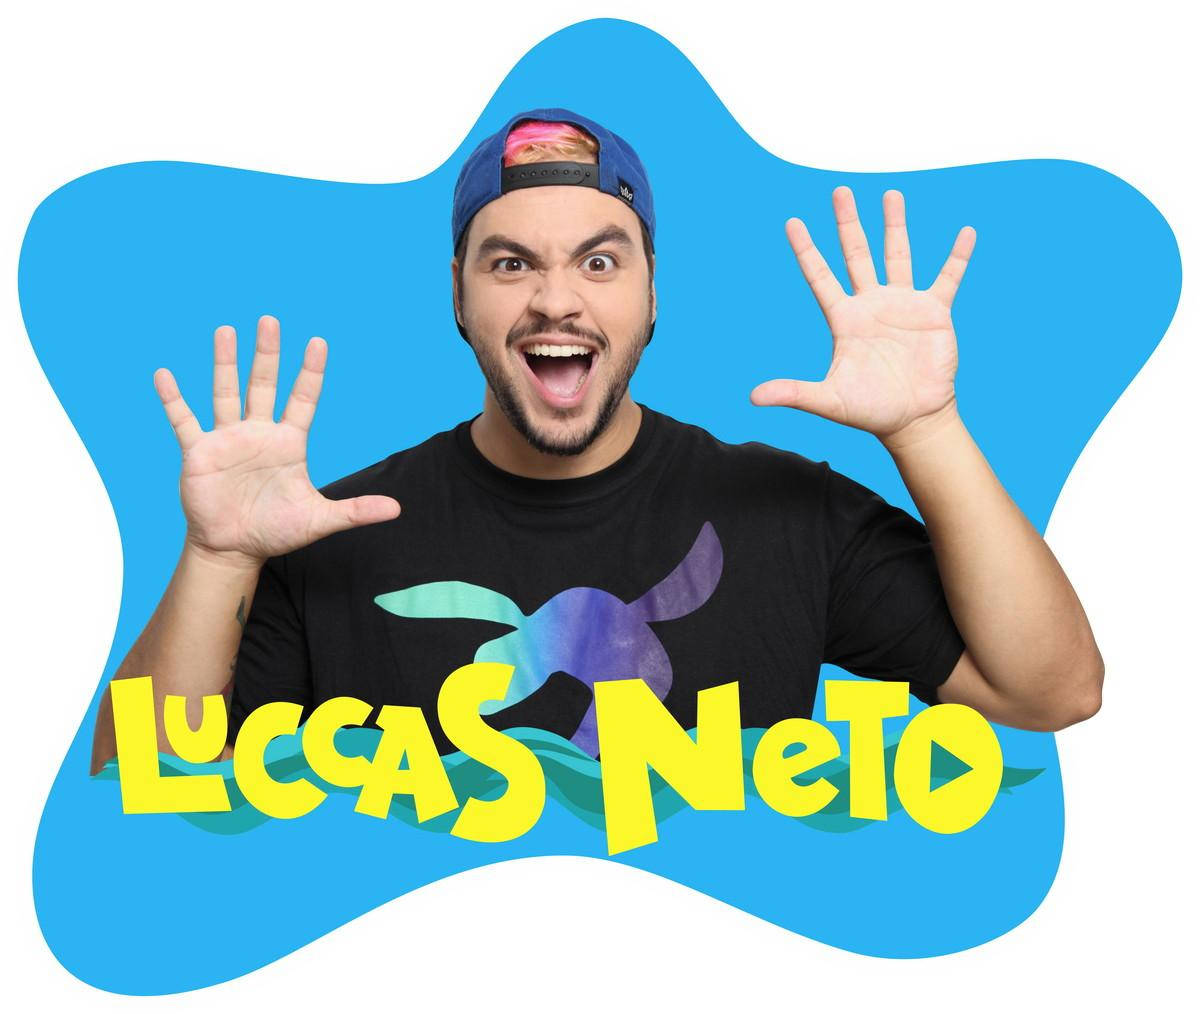 Luccas Neto Youtube Cover Wallpaper